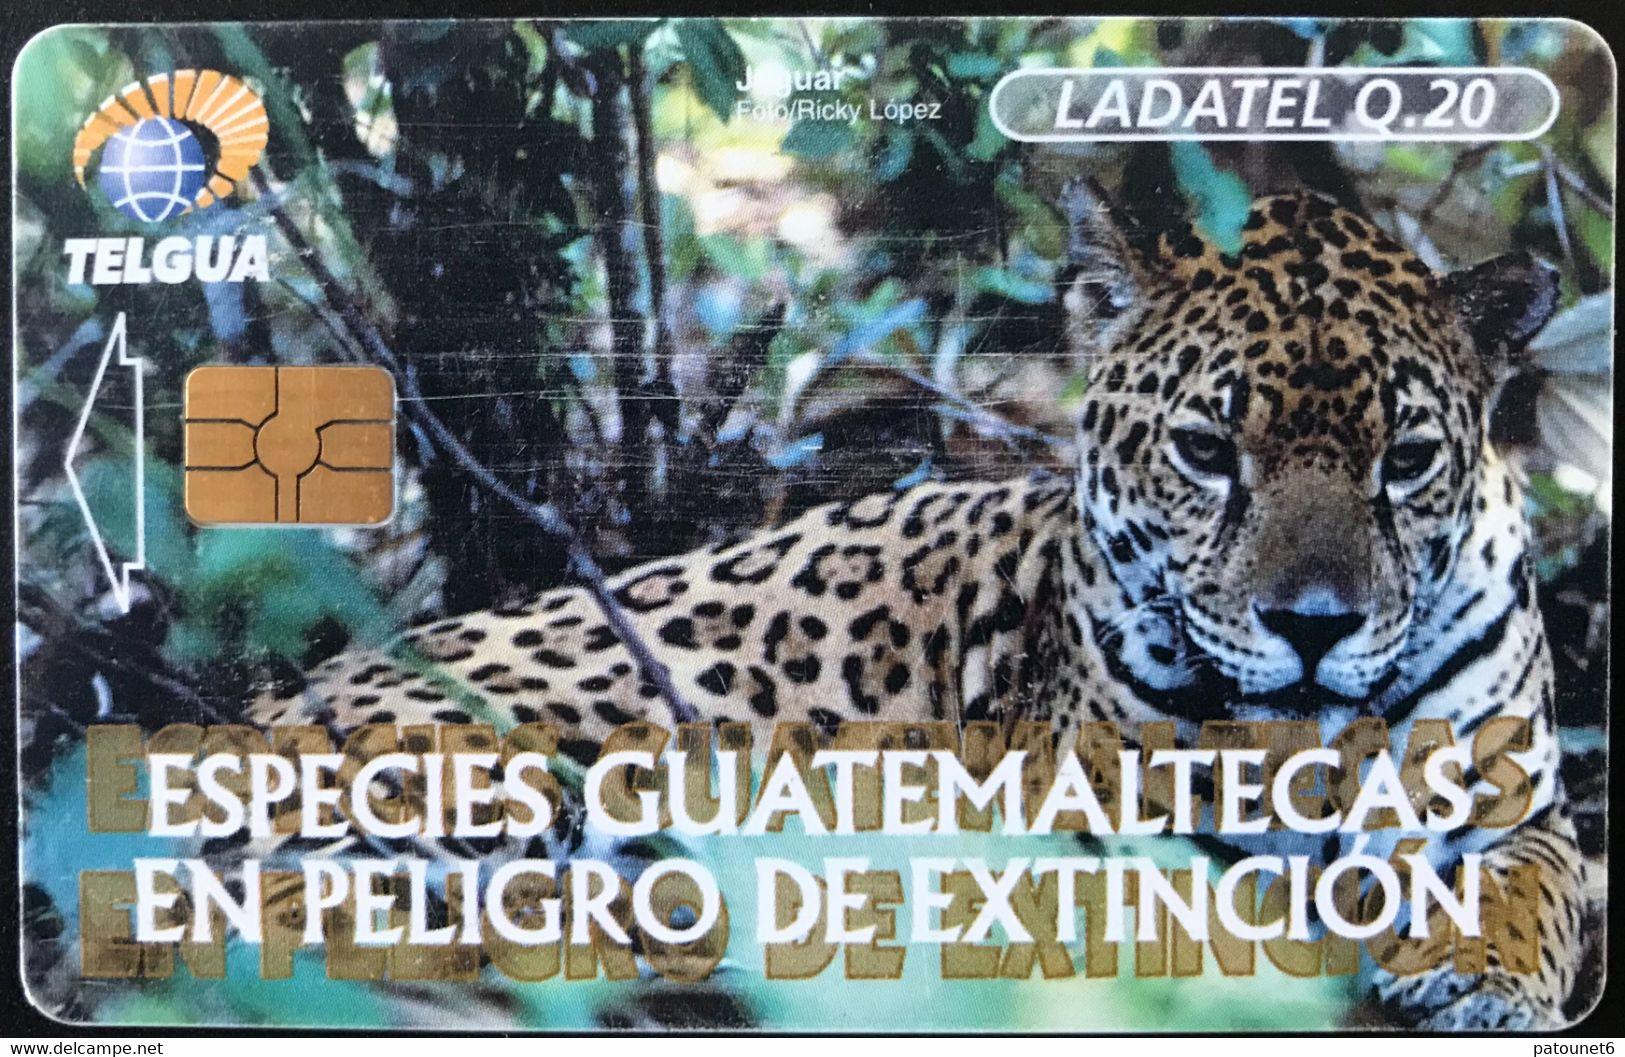 GUATEMALA  -  Phonecard  - Telgua -  Especies Guatemalcas En Peligro De Extincion -  Ladatel 0.20 - Guatemala